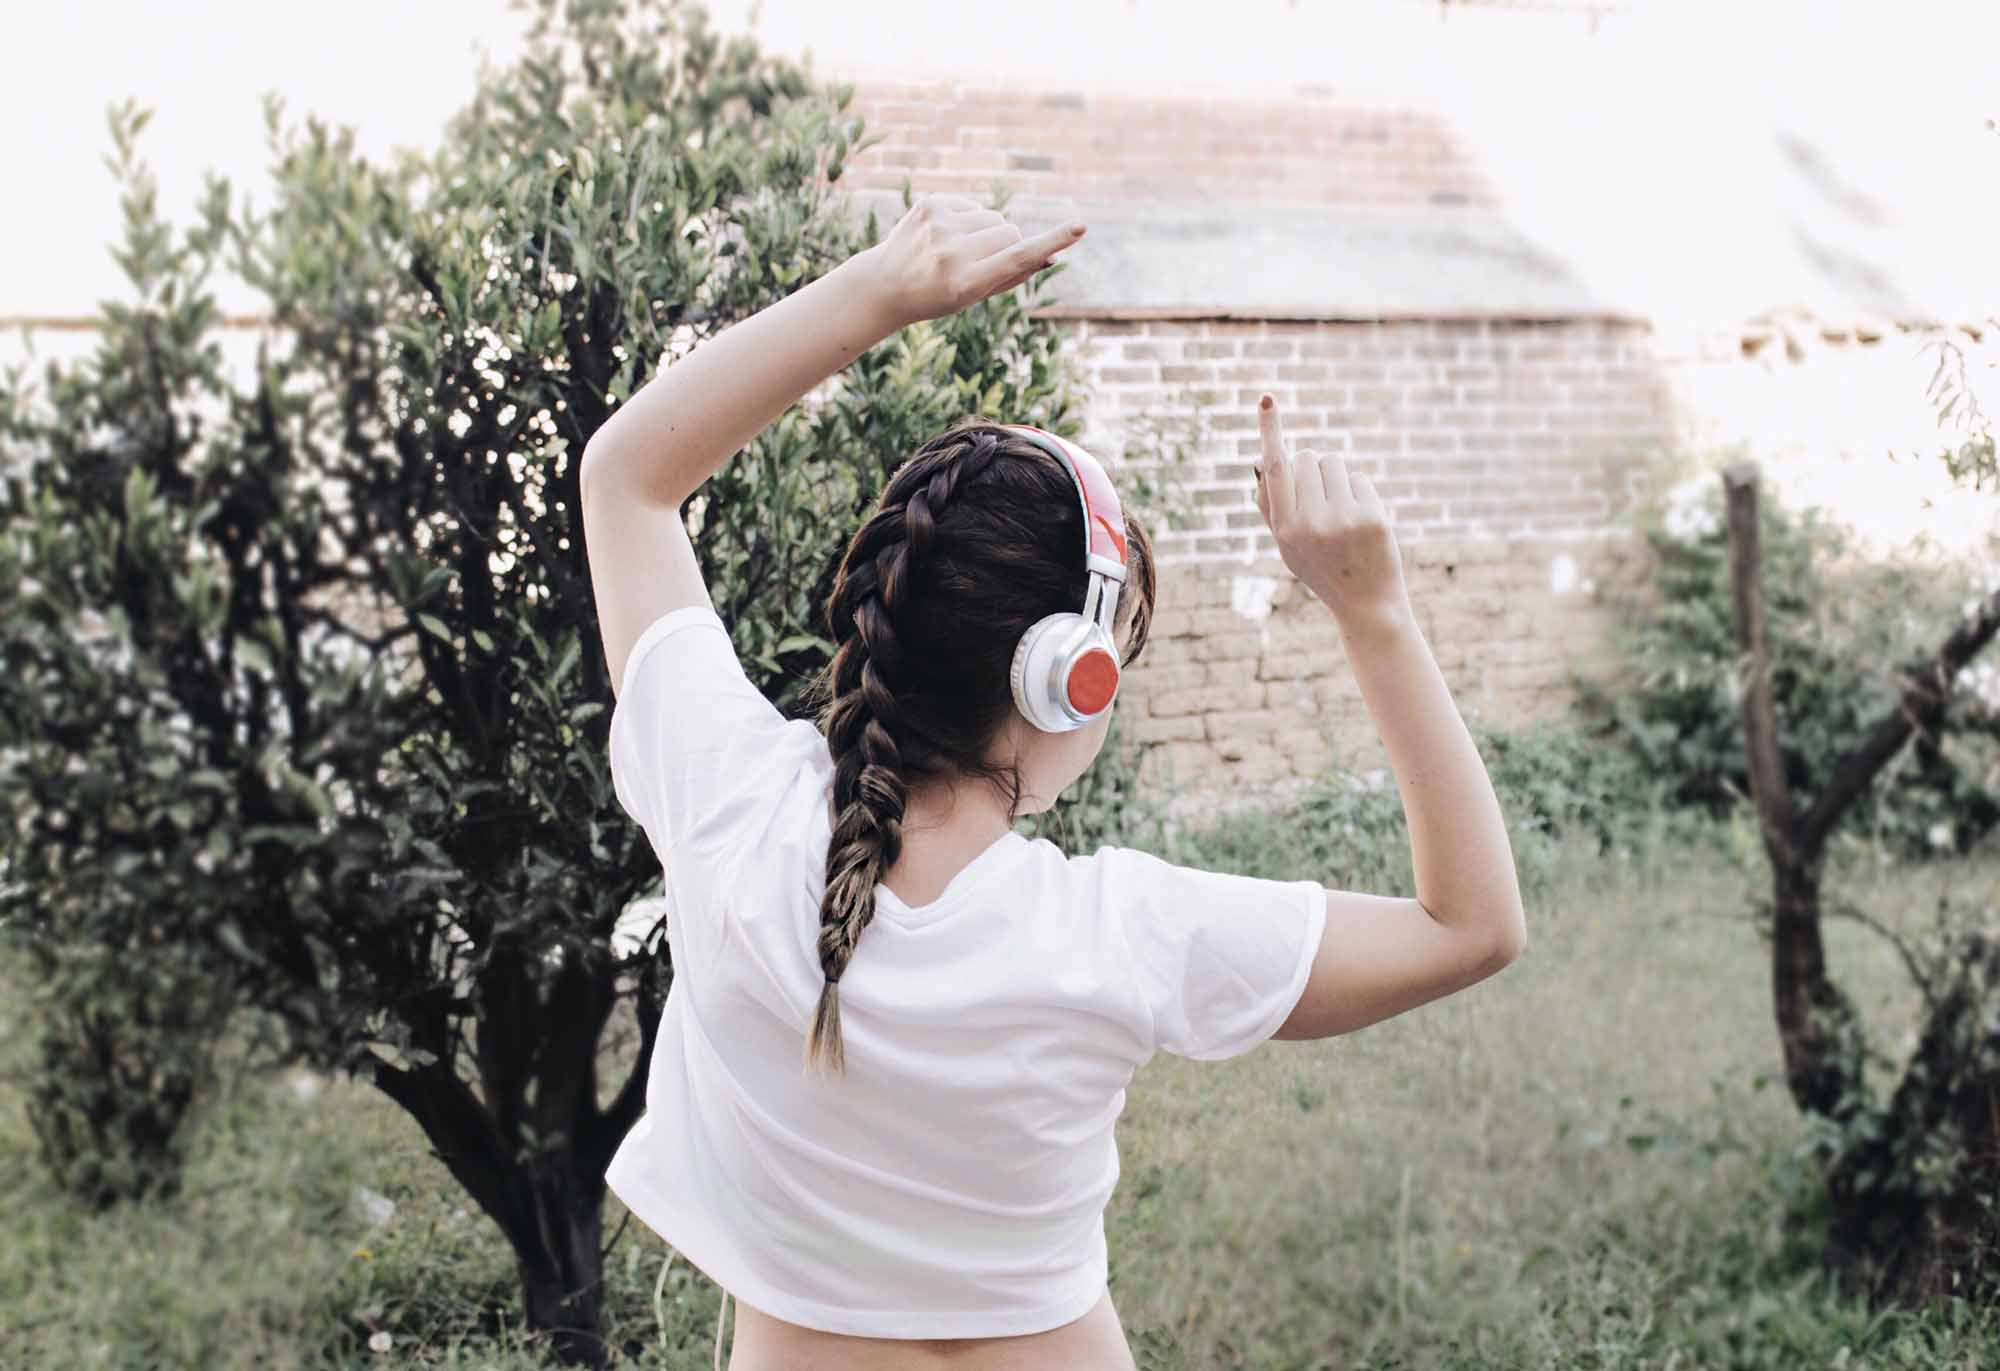 A Girl Dances Outside While Wearing Headphones